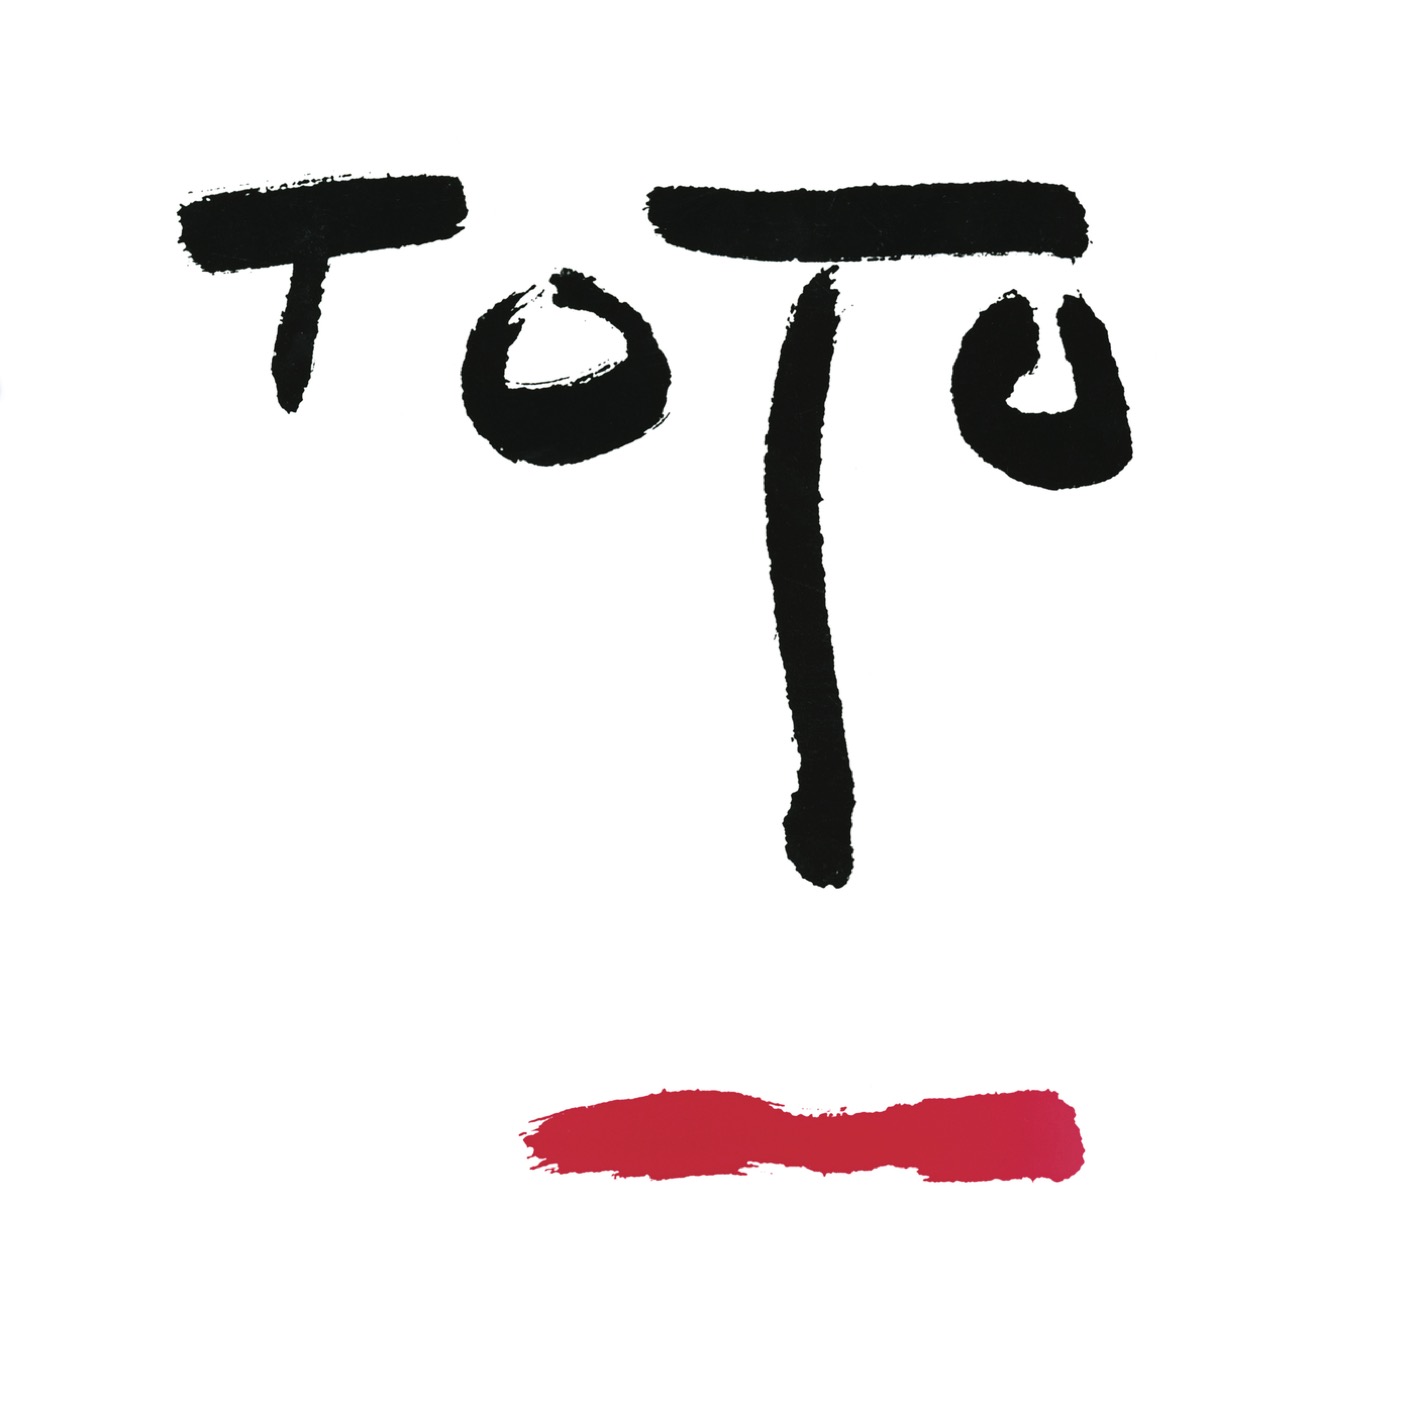 Toto – Turn Back (Remastered) (1979/2020) [FLAC 24bit/192kHz]